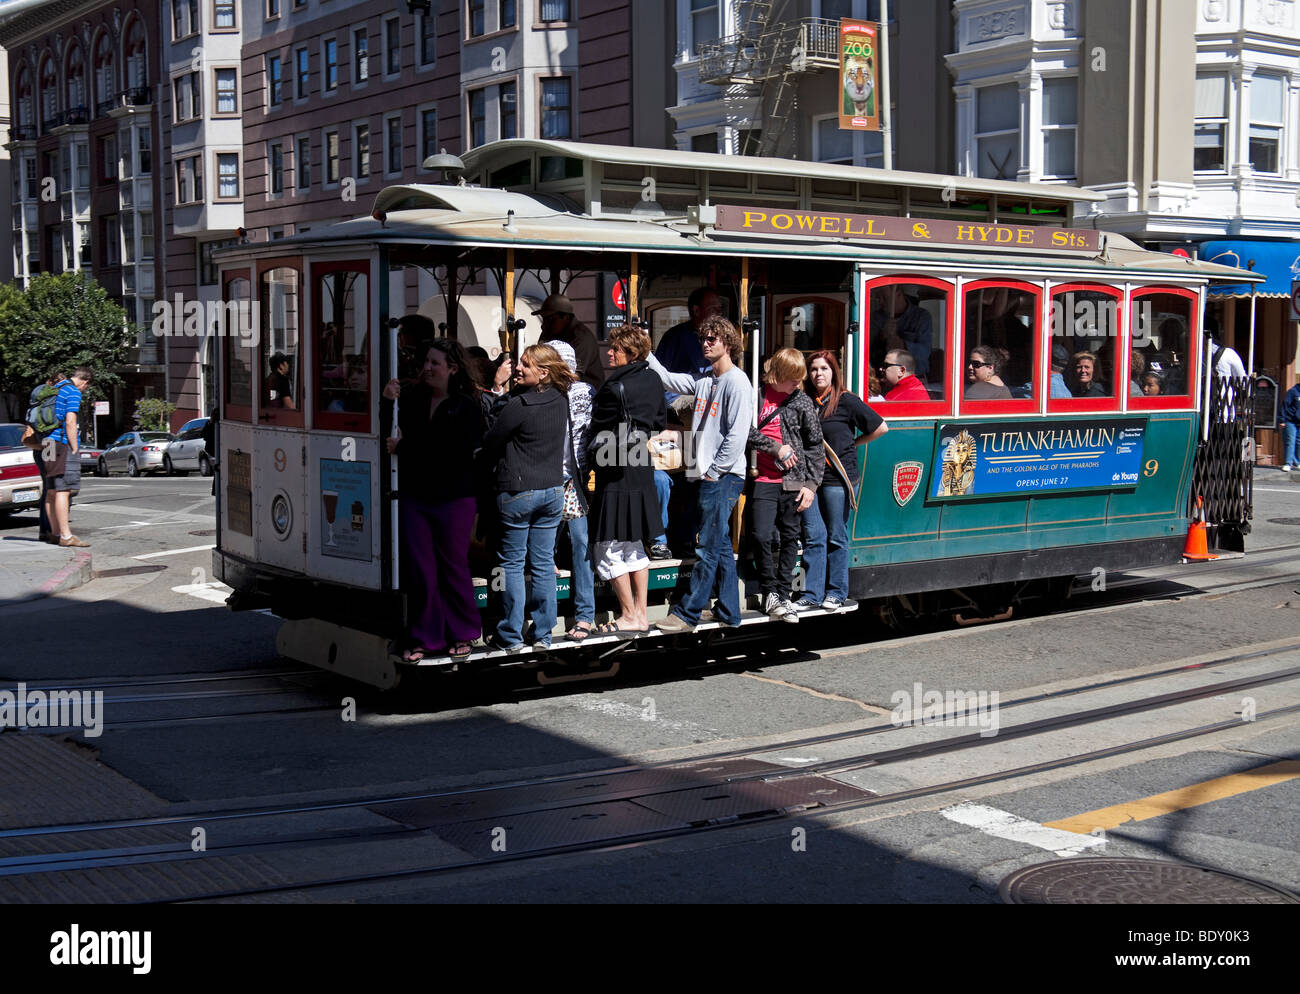 Rue voiture de câble, San Francisco, California, USA Banque D'Images